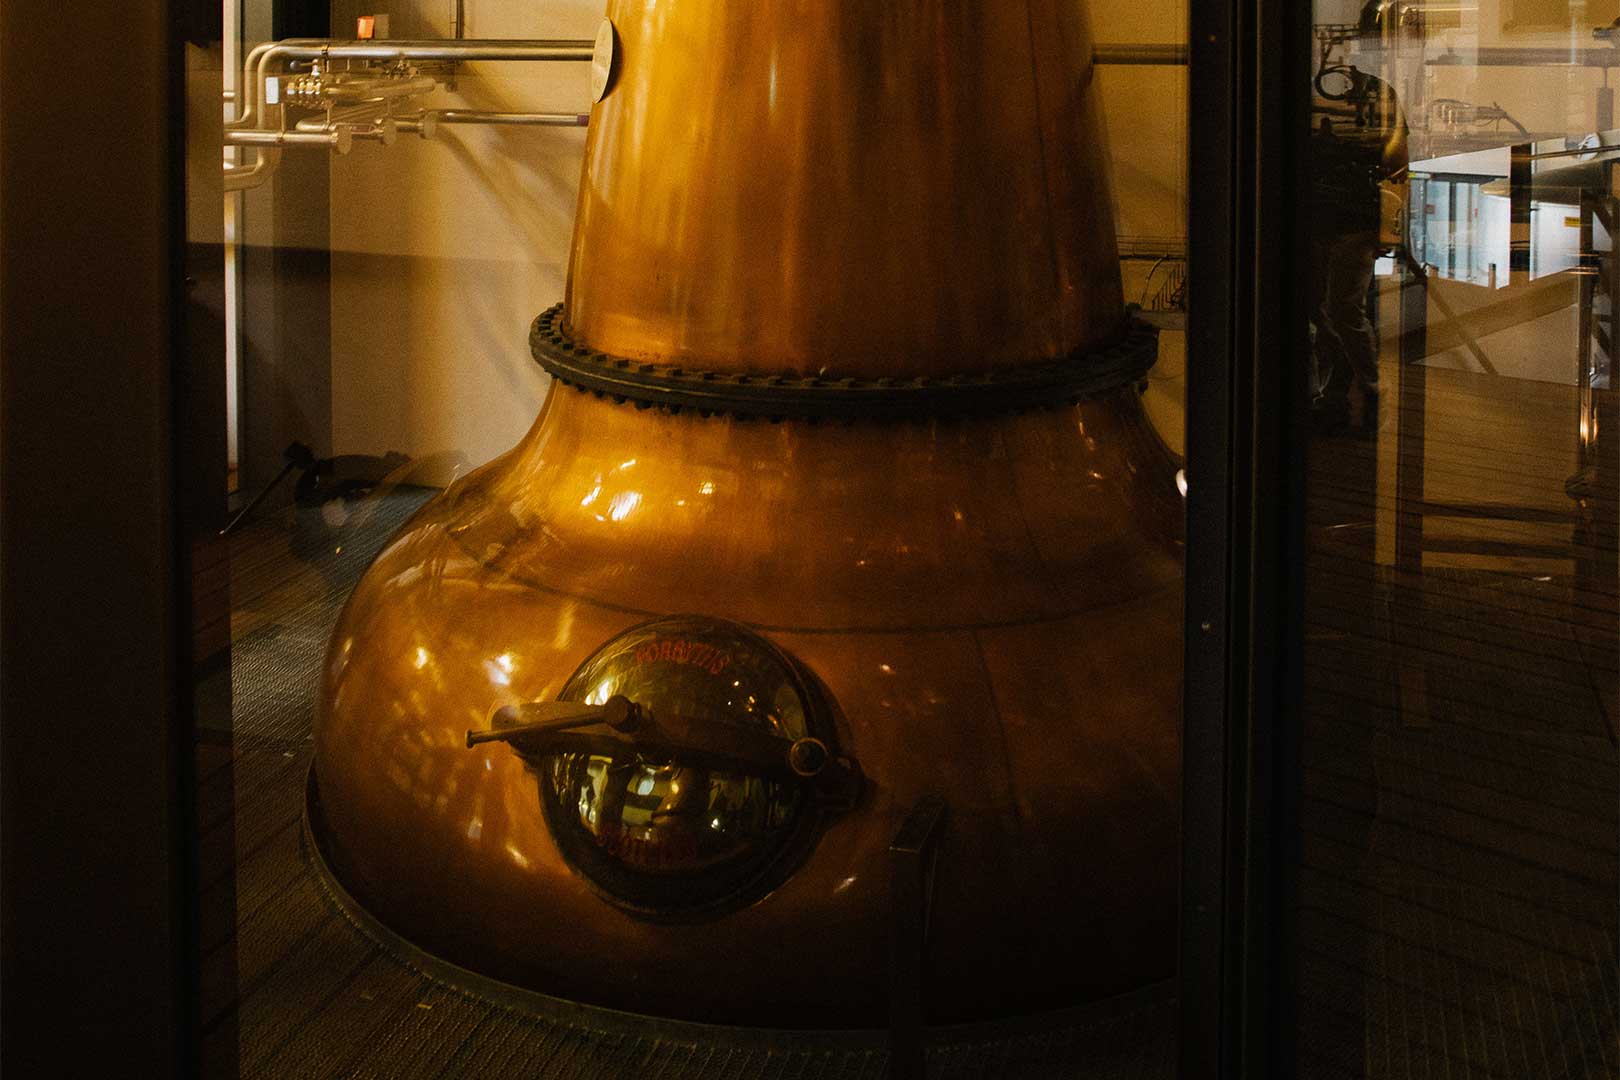 whisky brennerei st. kilian distillers gmbh ruedenau cp malte gruener WEB 3 2 1620x1080 pioptuudvmfv 1